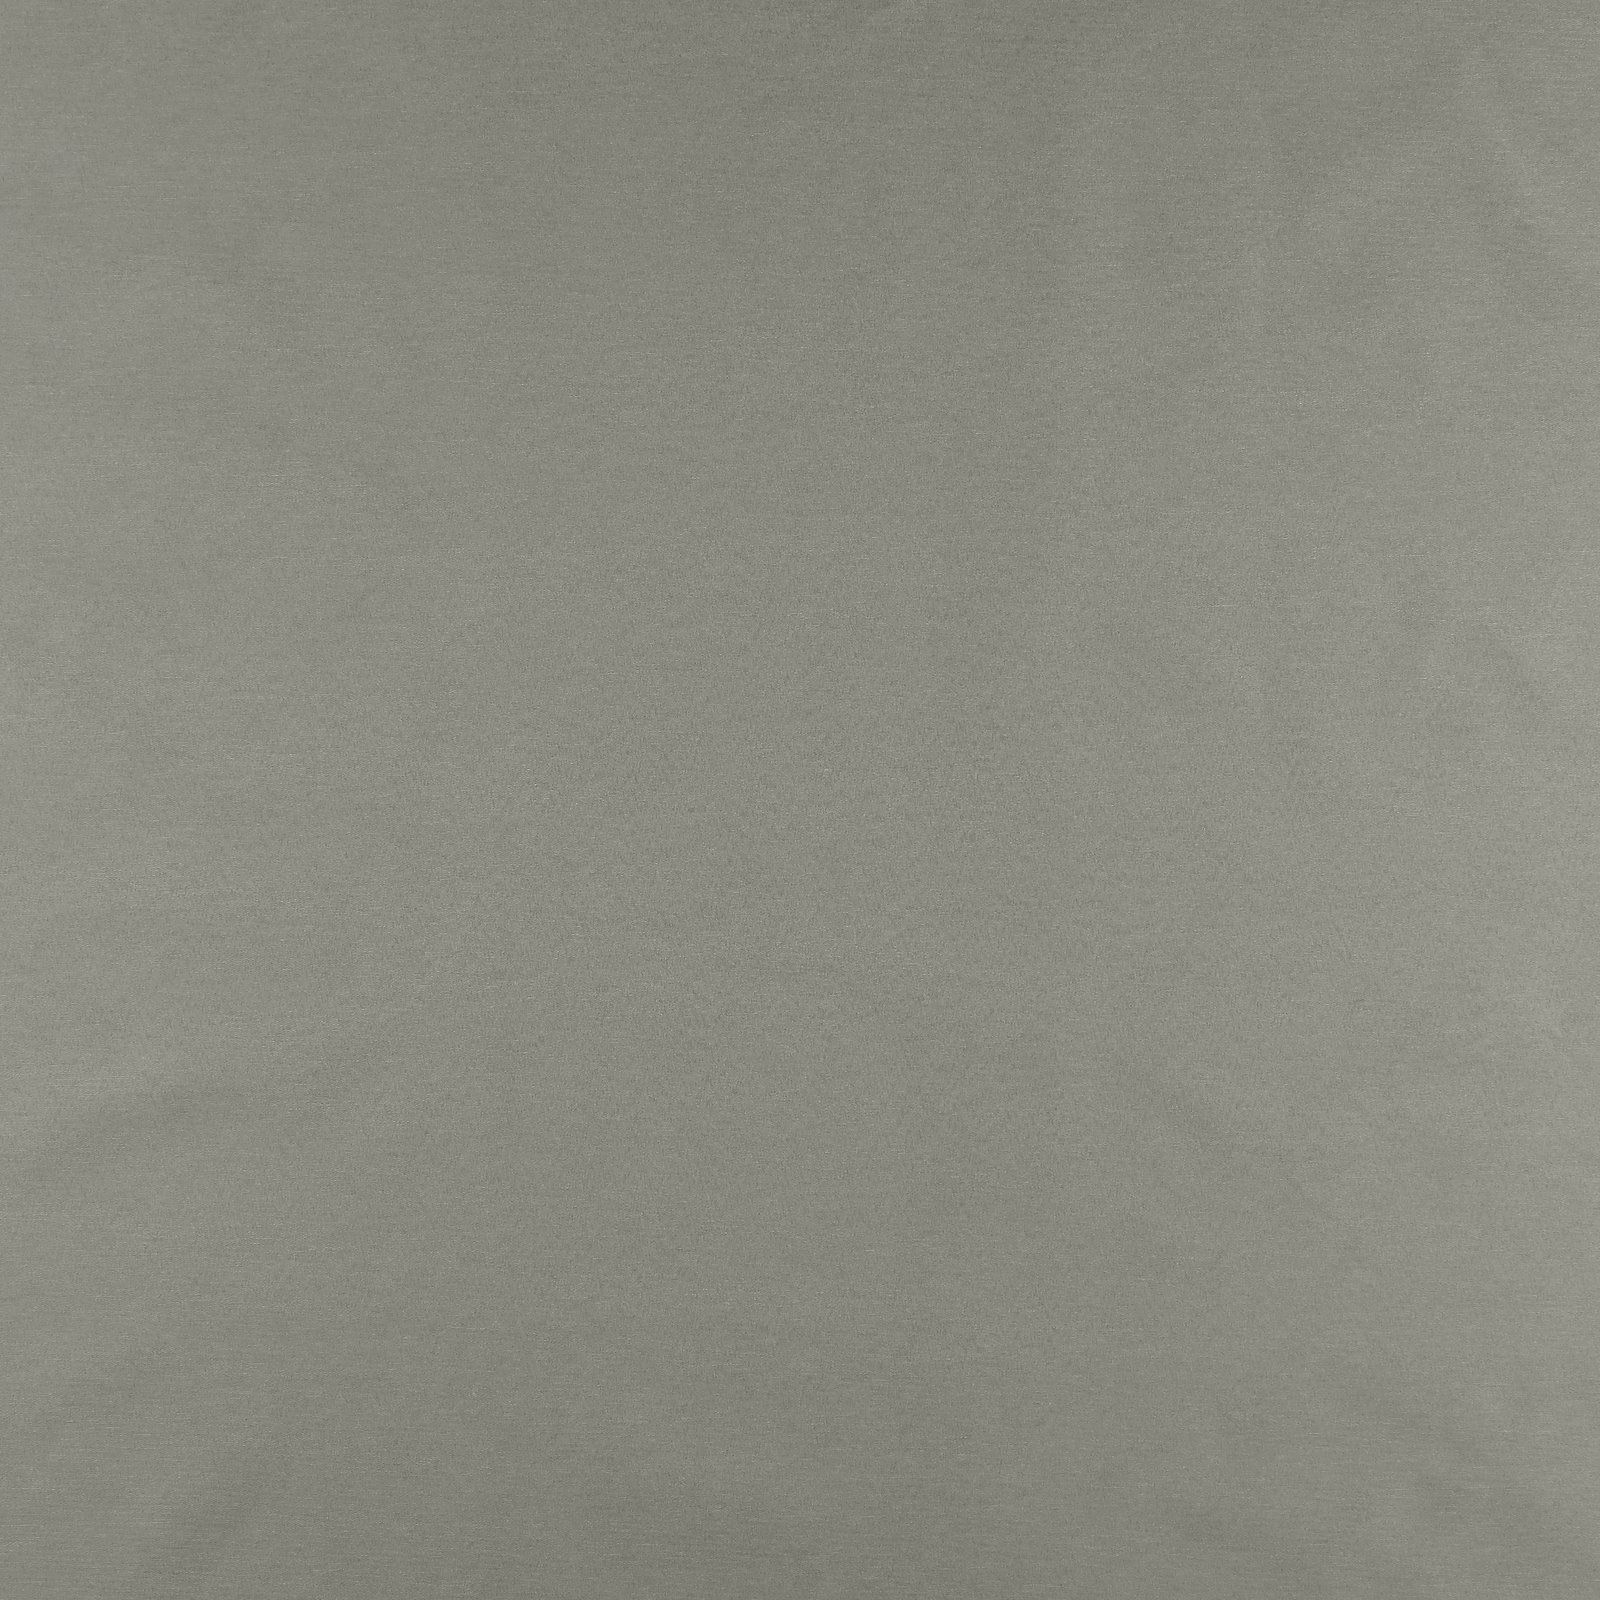 Tekstilvoksdug lys grå 158-160cm bred 870252_pack_solid